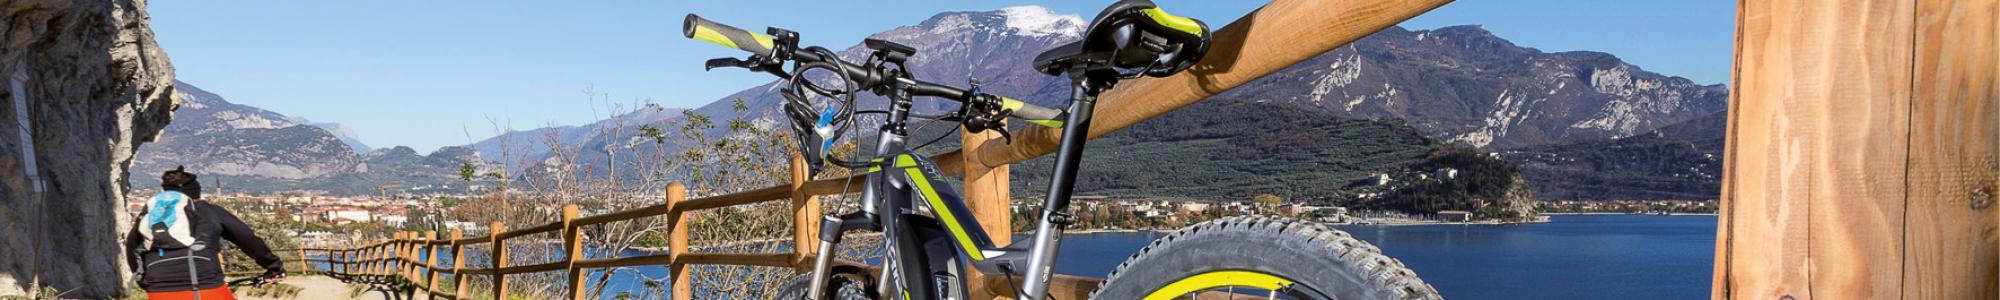  GIFT RUDY BOX - E-Bike Experience e SPA 